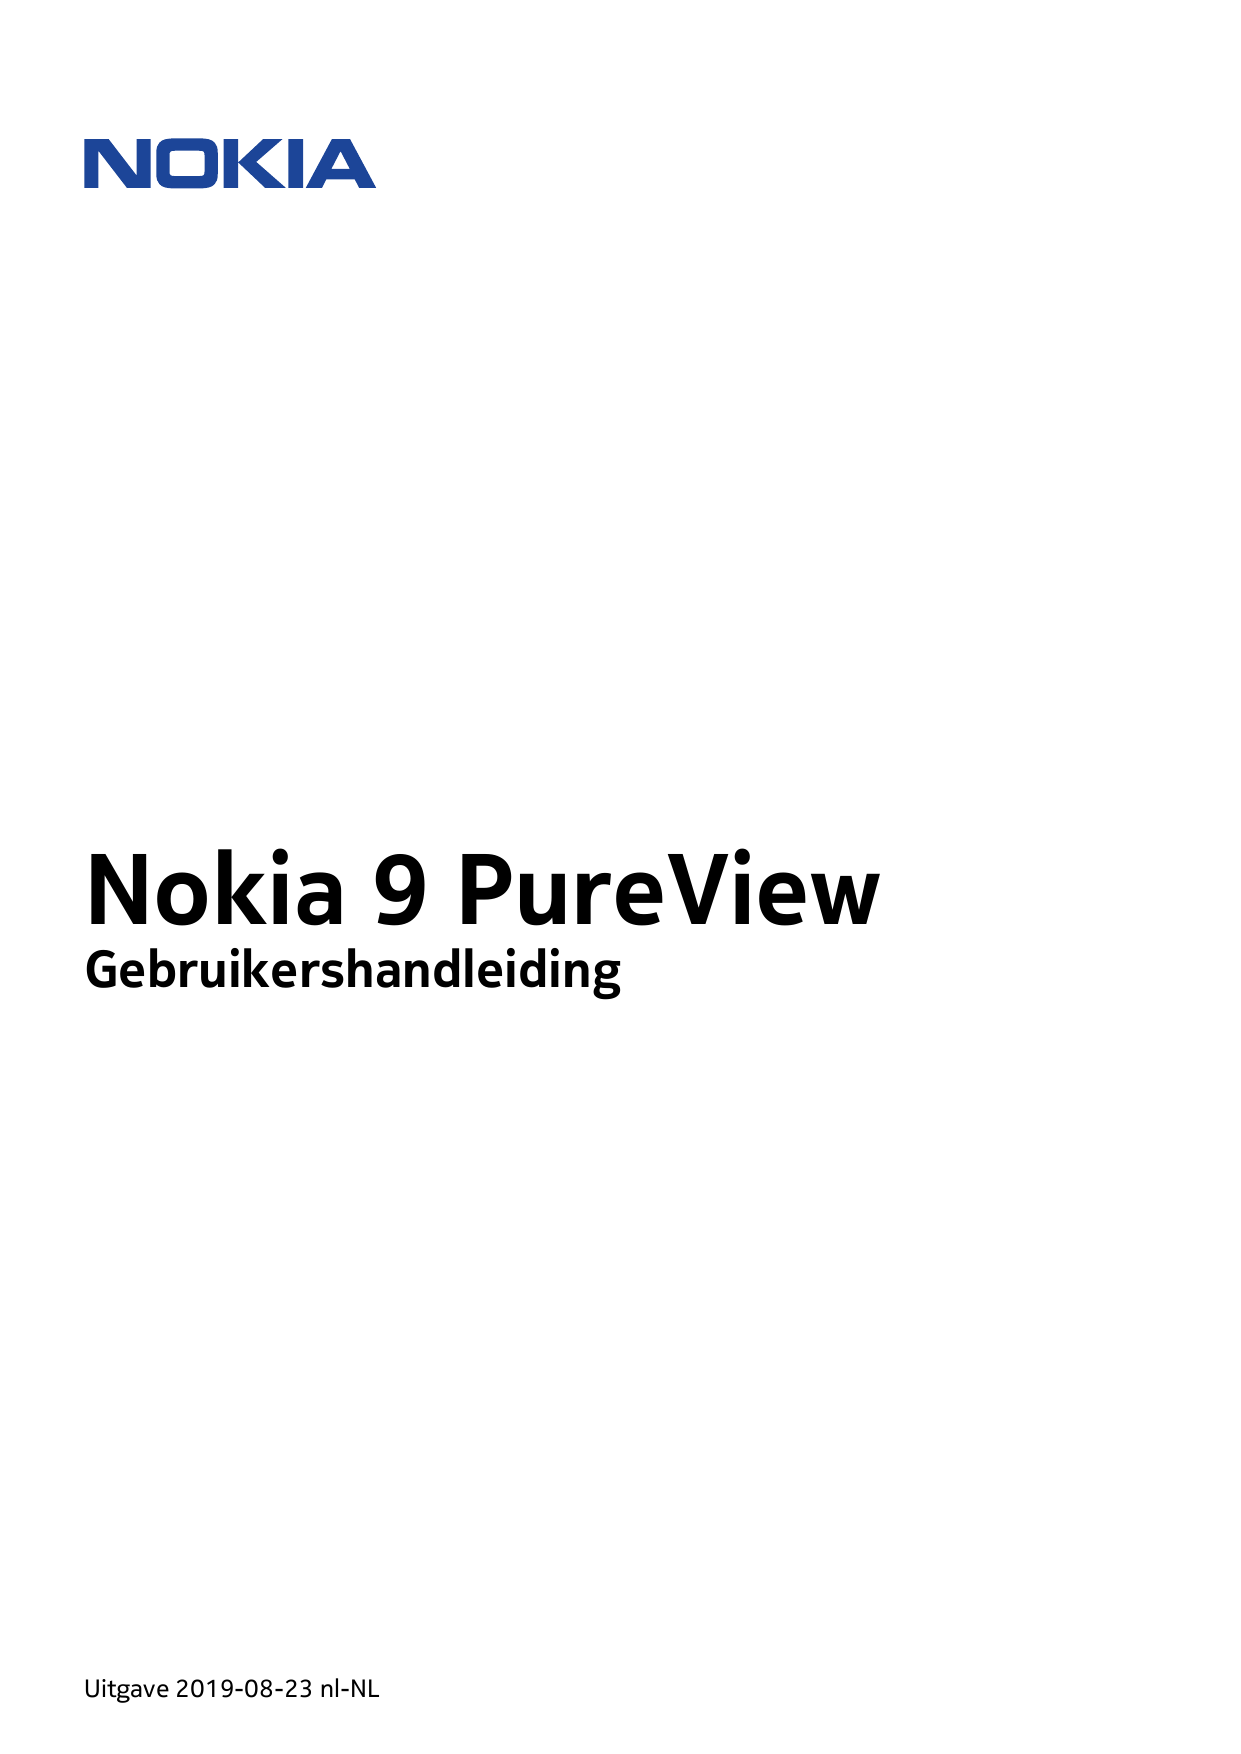 Nokia 9 PureViewGebruikershandleidingUitgave 2019-08-23 nl-NL